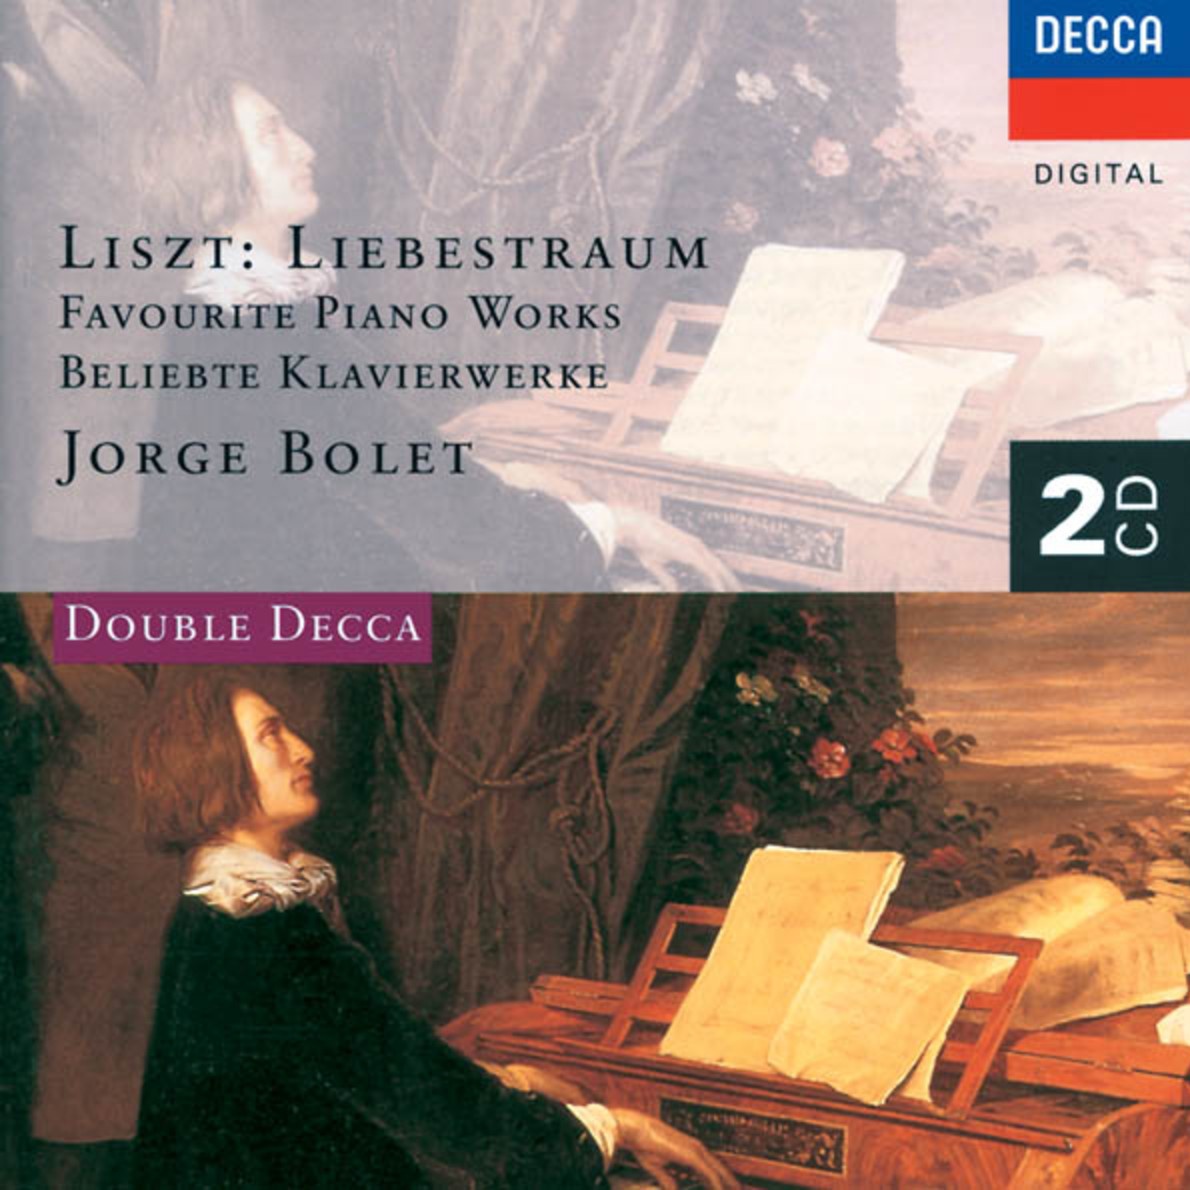 Liszt: Die Forelle, S. 564 piano transcription after Schubert